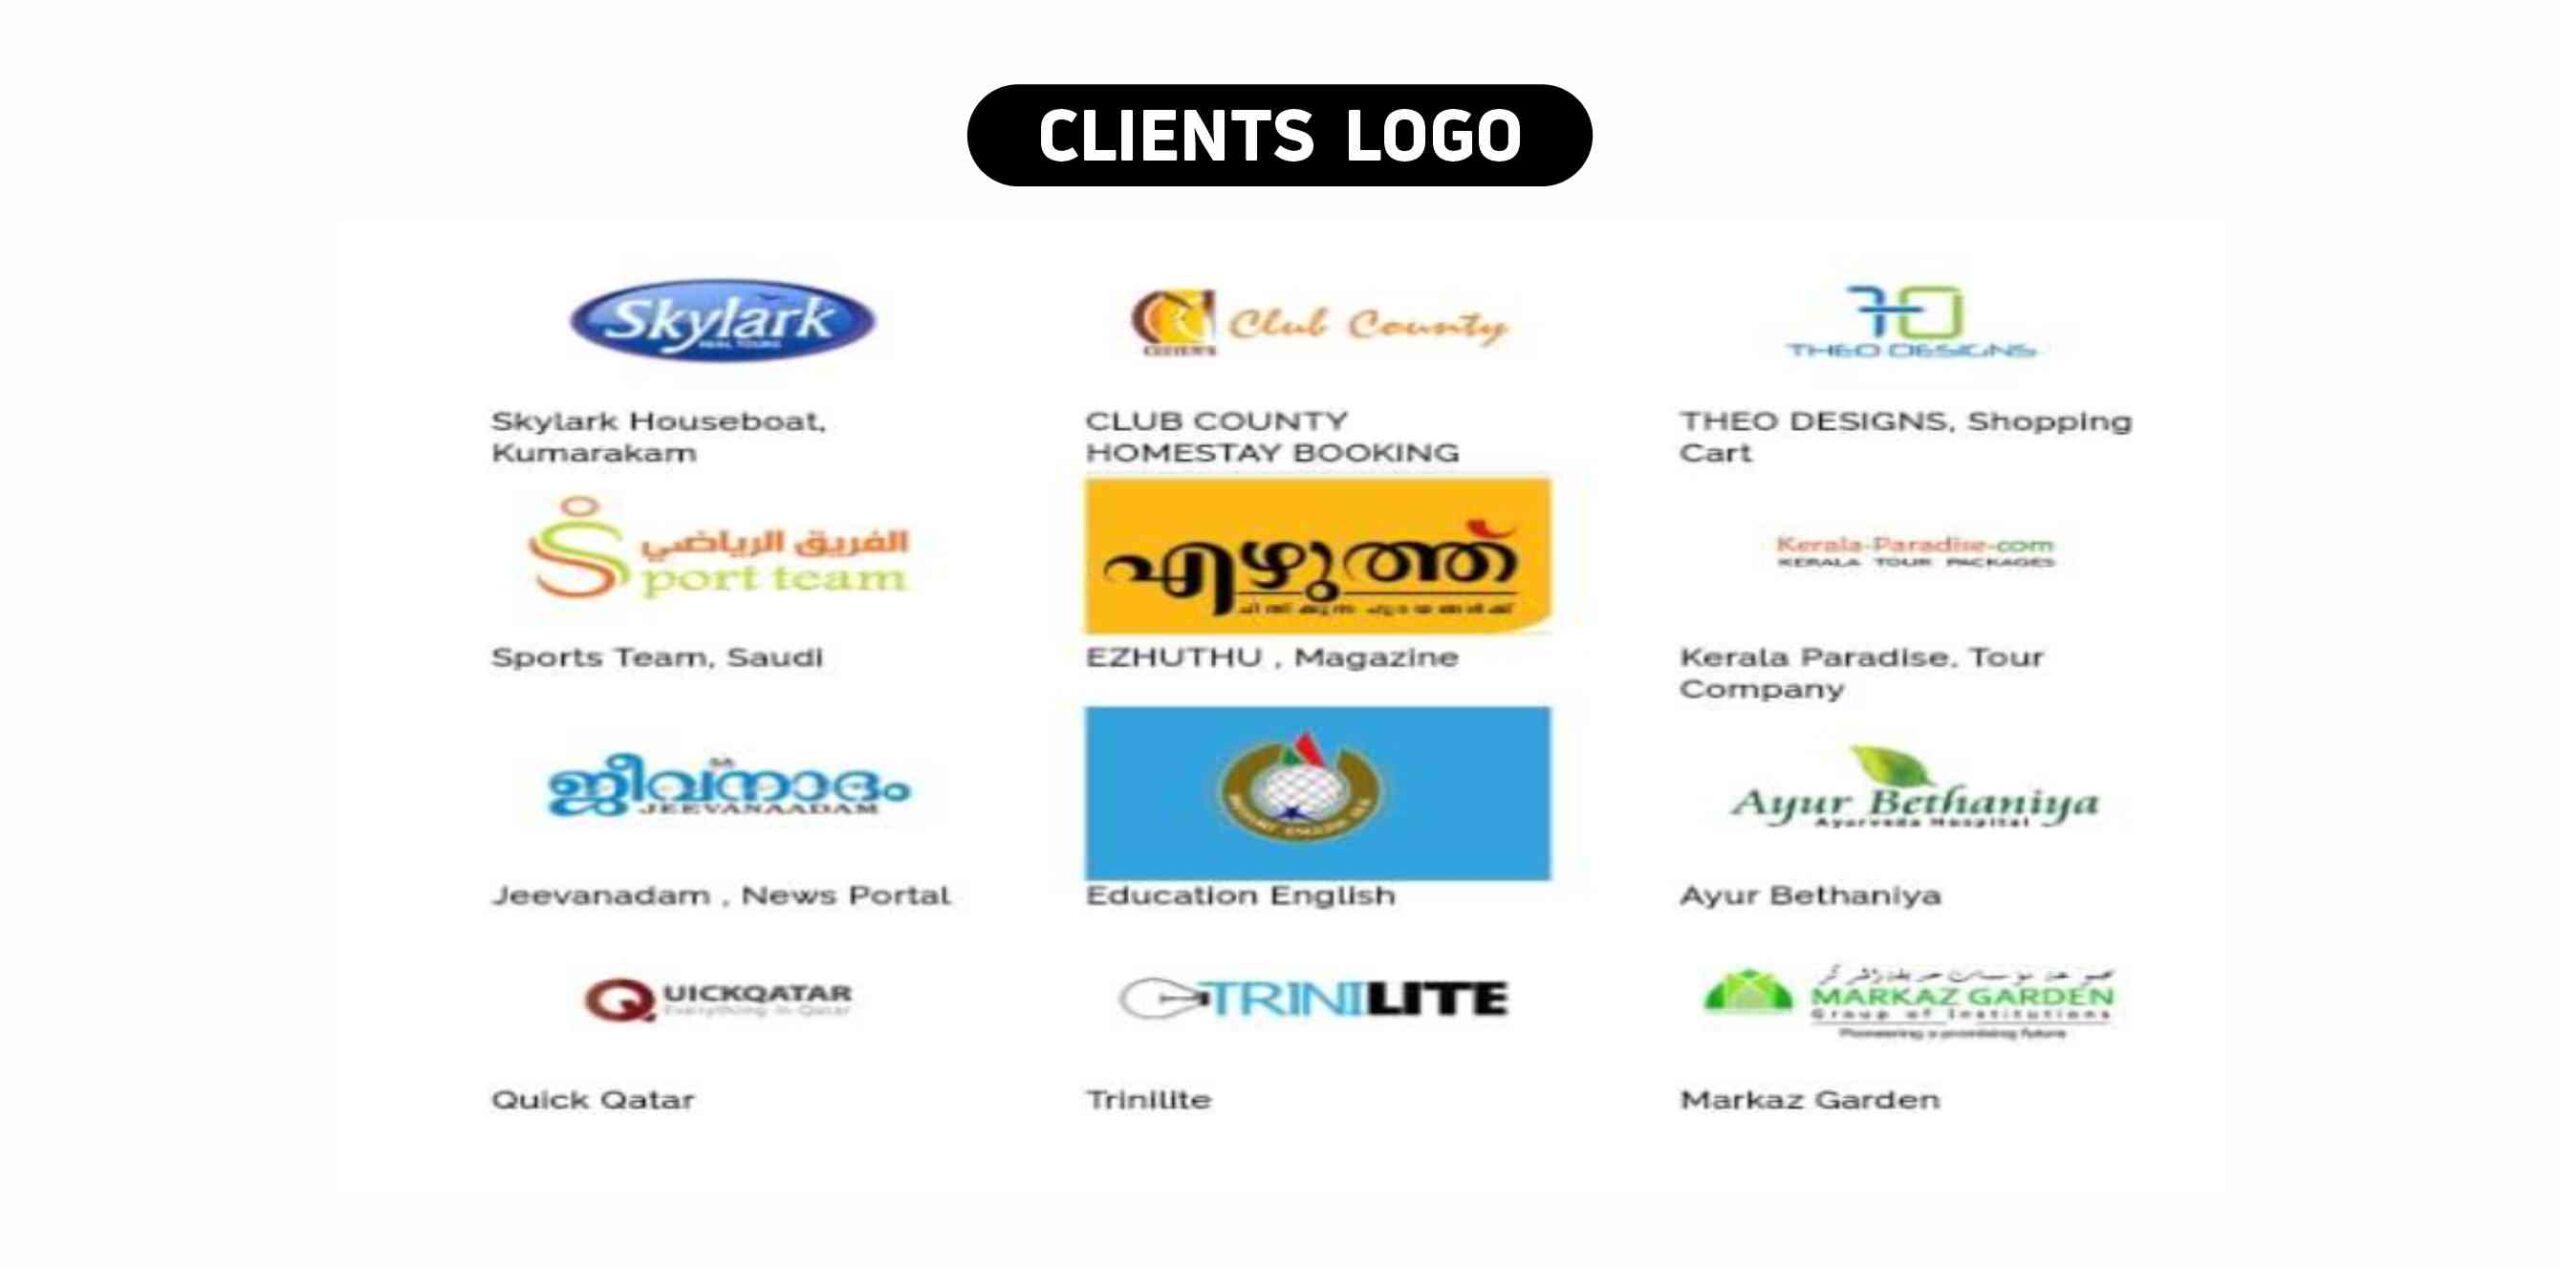 TGI technologies Clients Logo